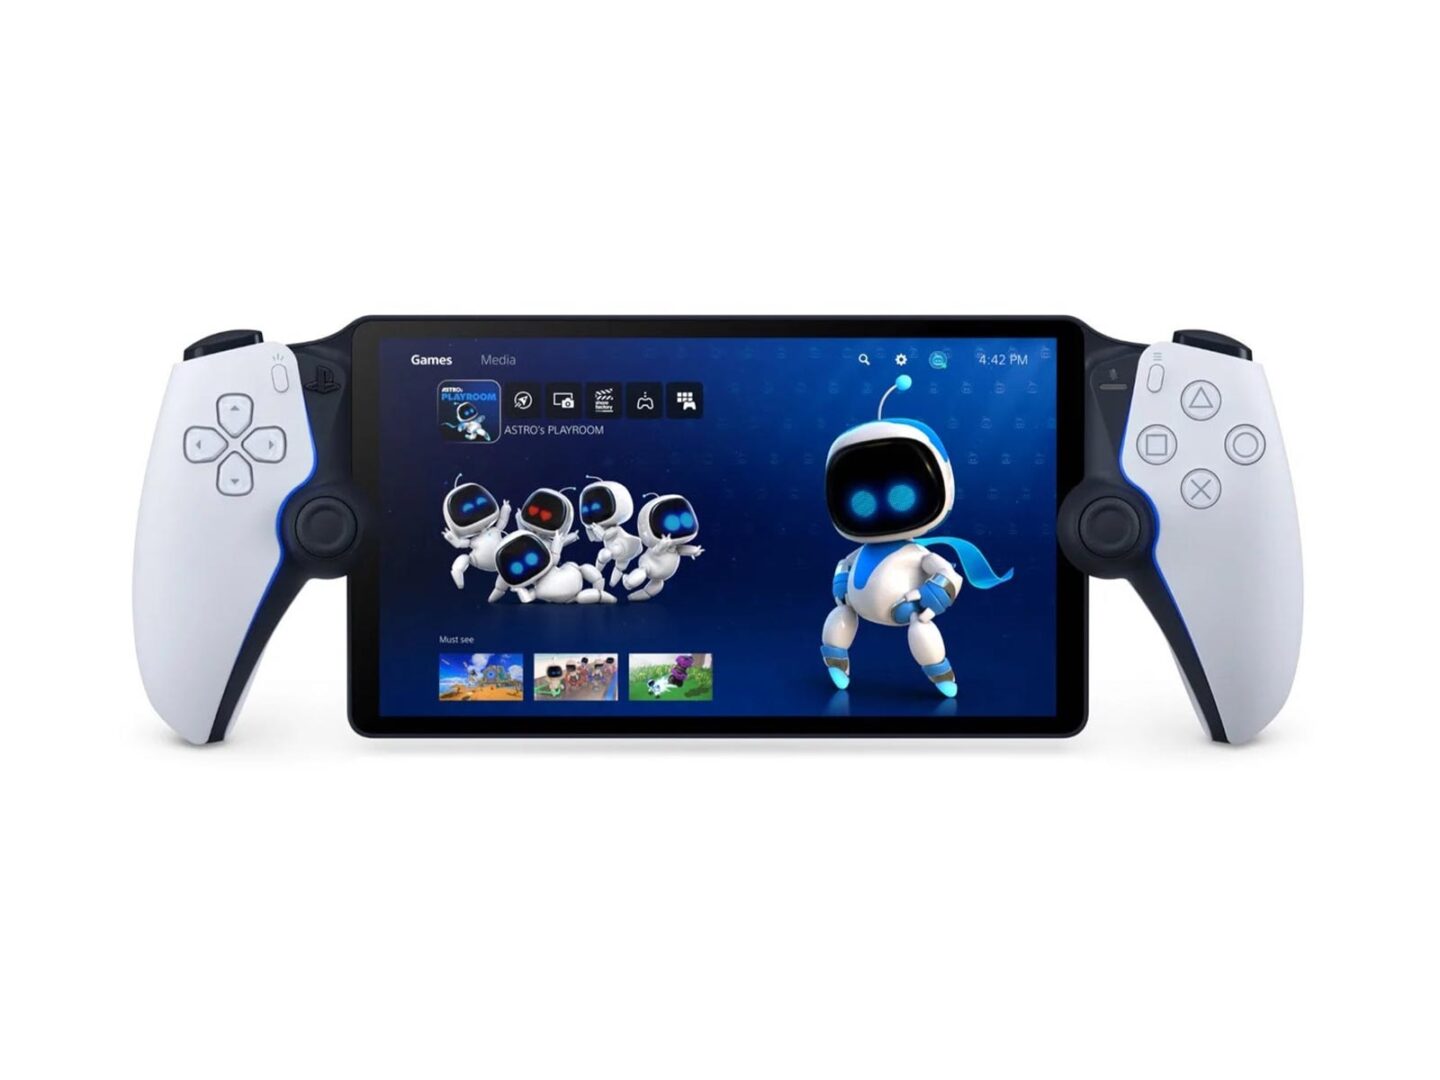 PlayStation Portal: Sony’s new handheld device